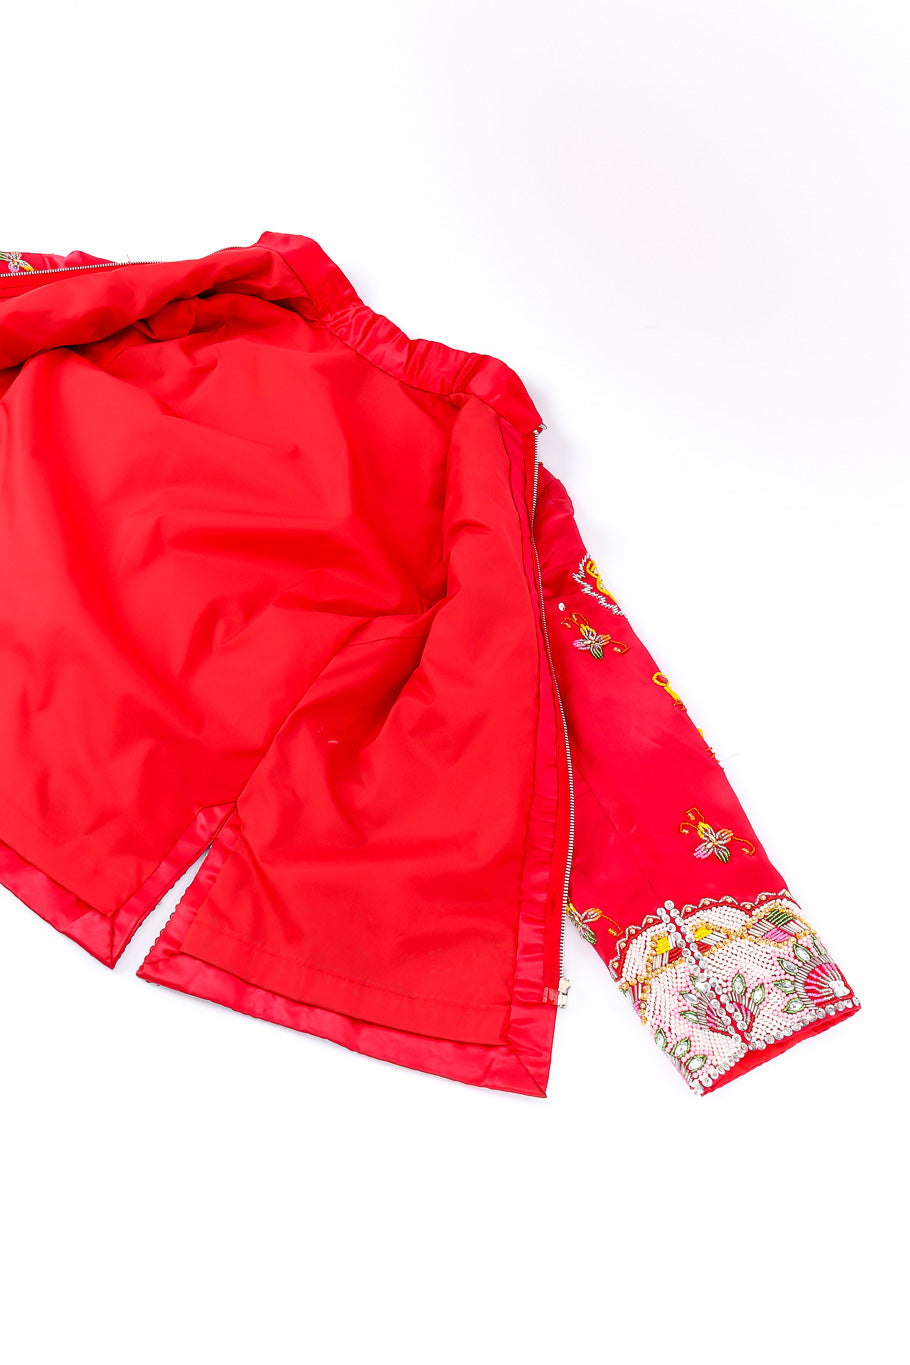 Embellished silk dragon jacket lining detail @recessla